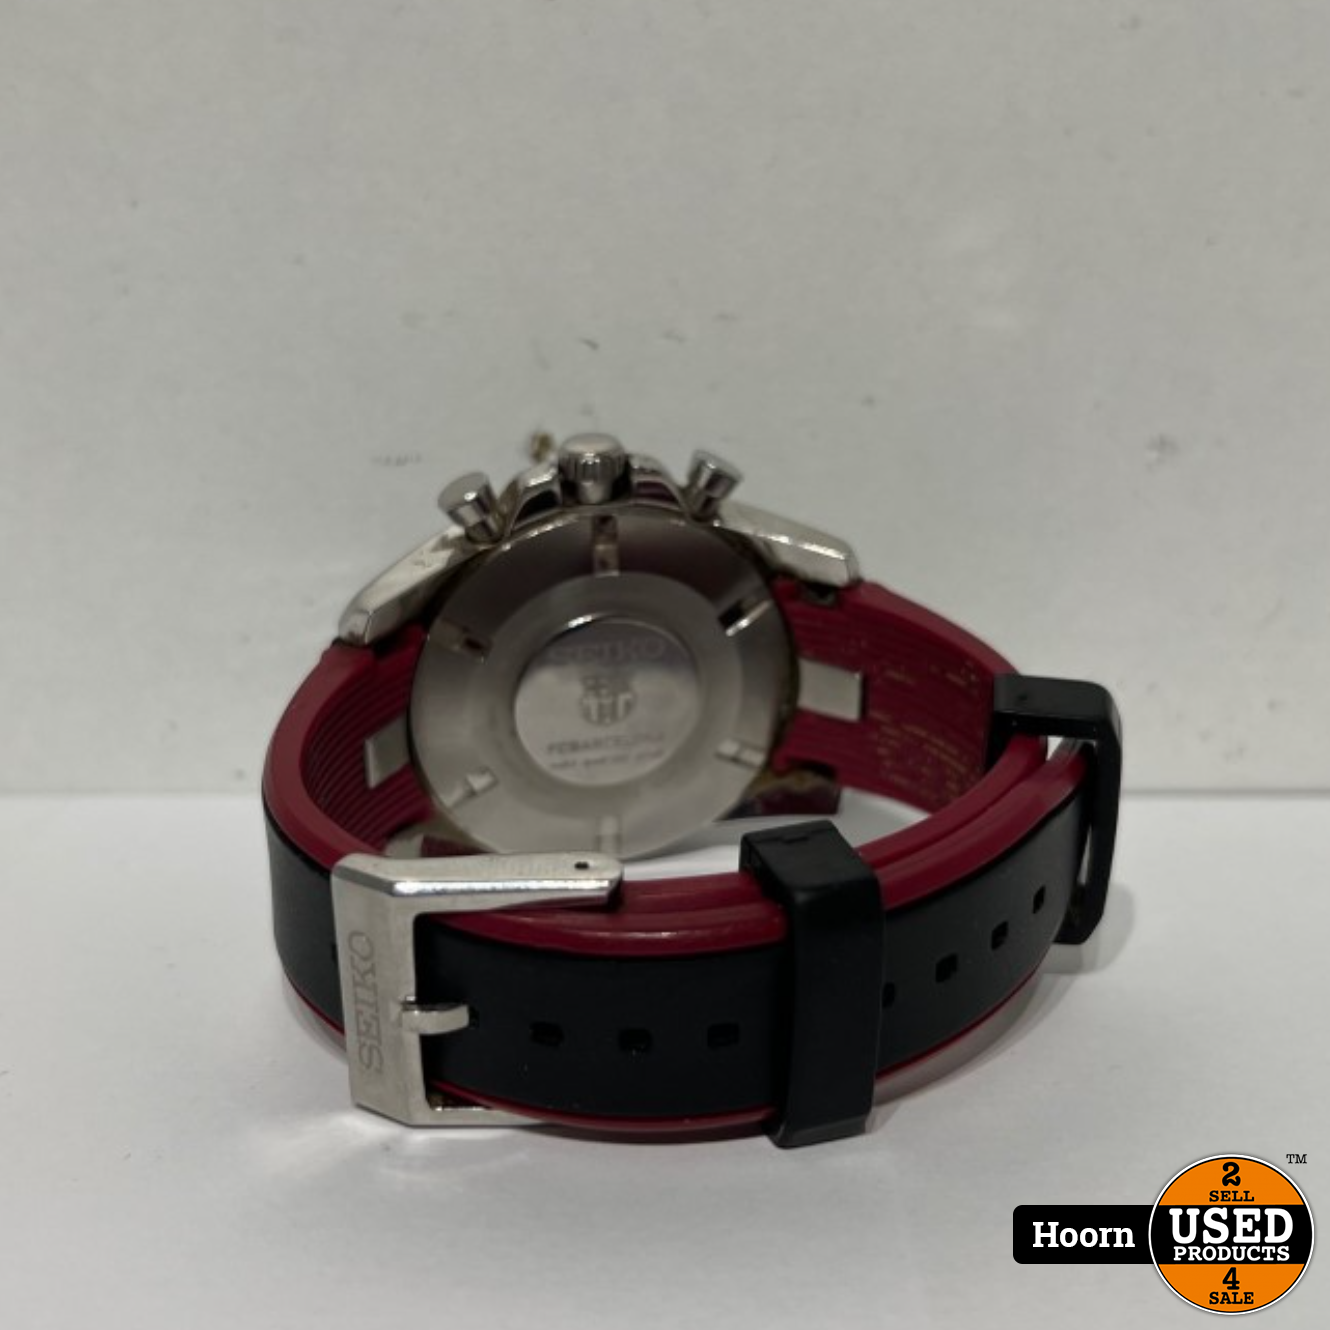 Seiko Sportura FC Barcelona SNAE93P1 42mm Quartz Horloge - Used Products Hoorn